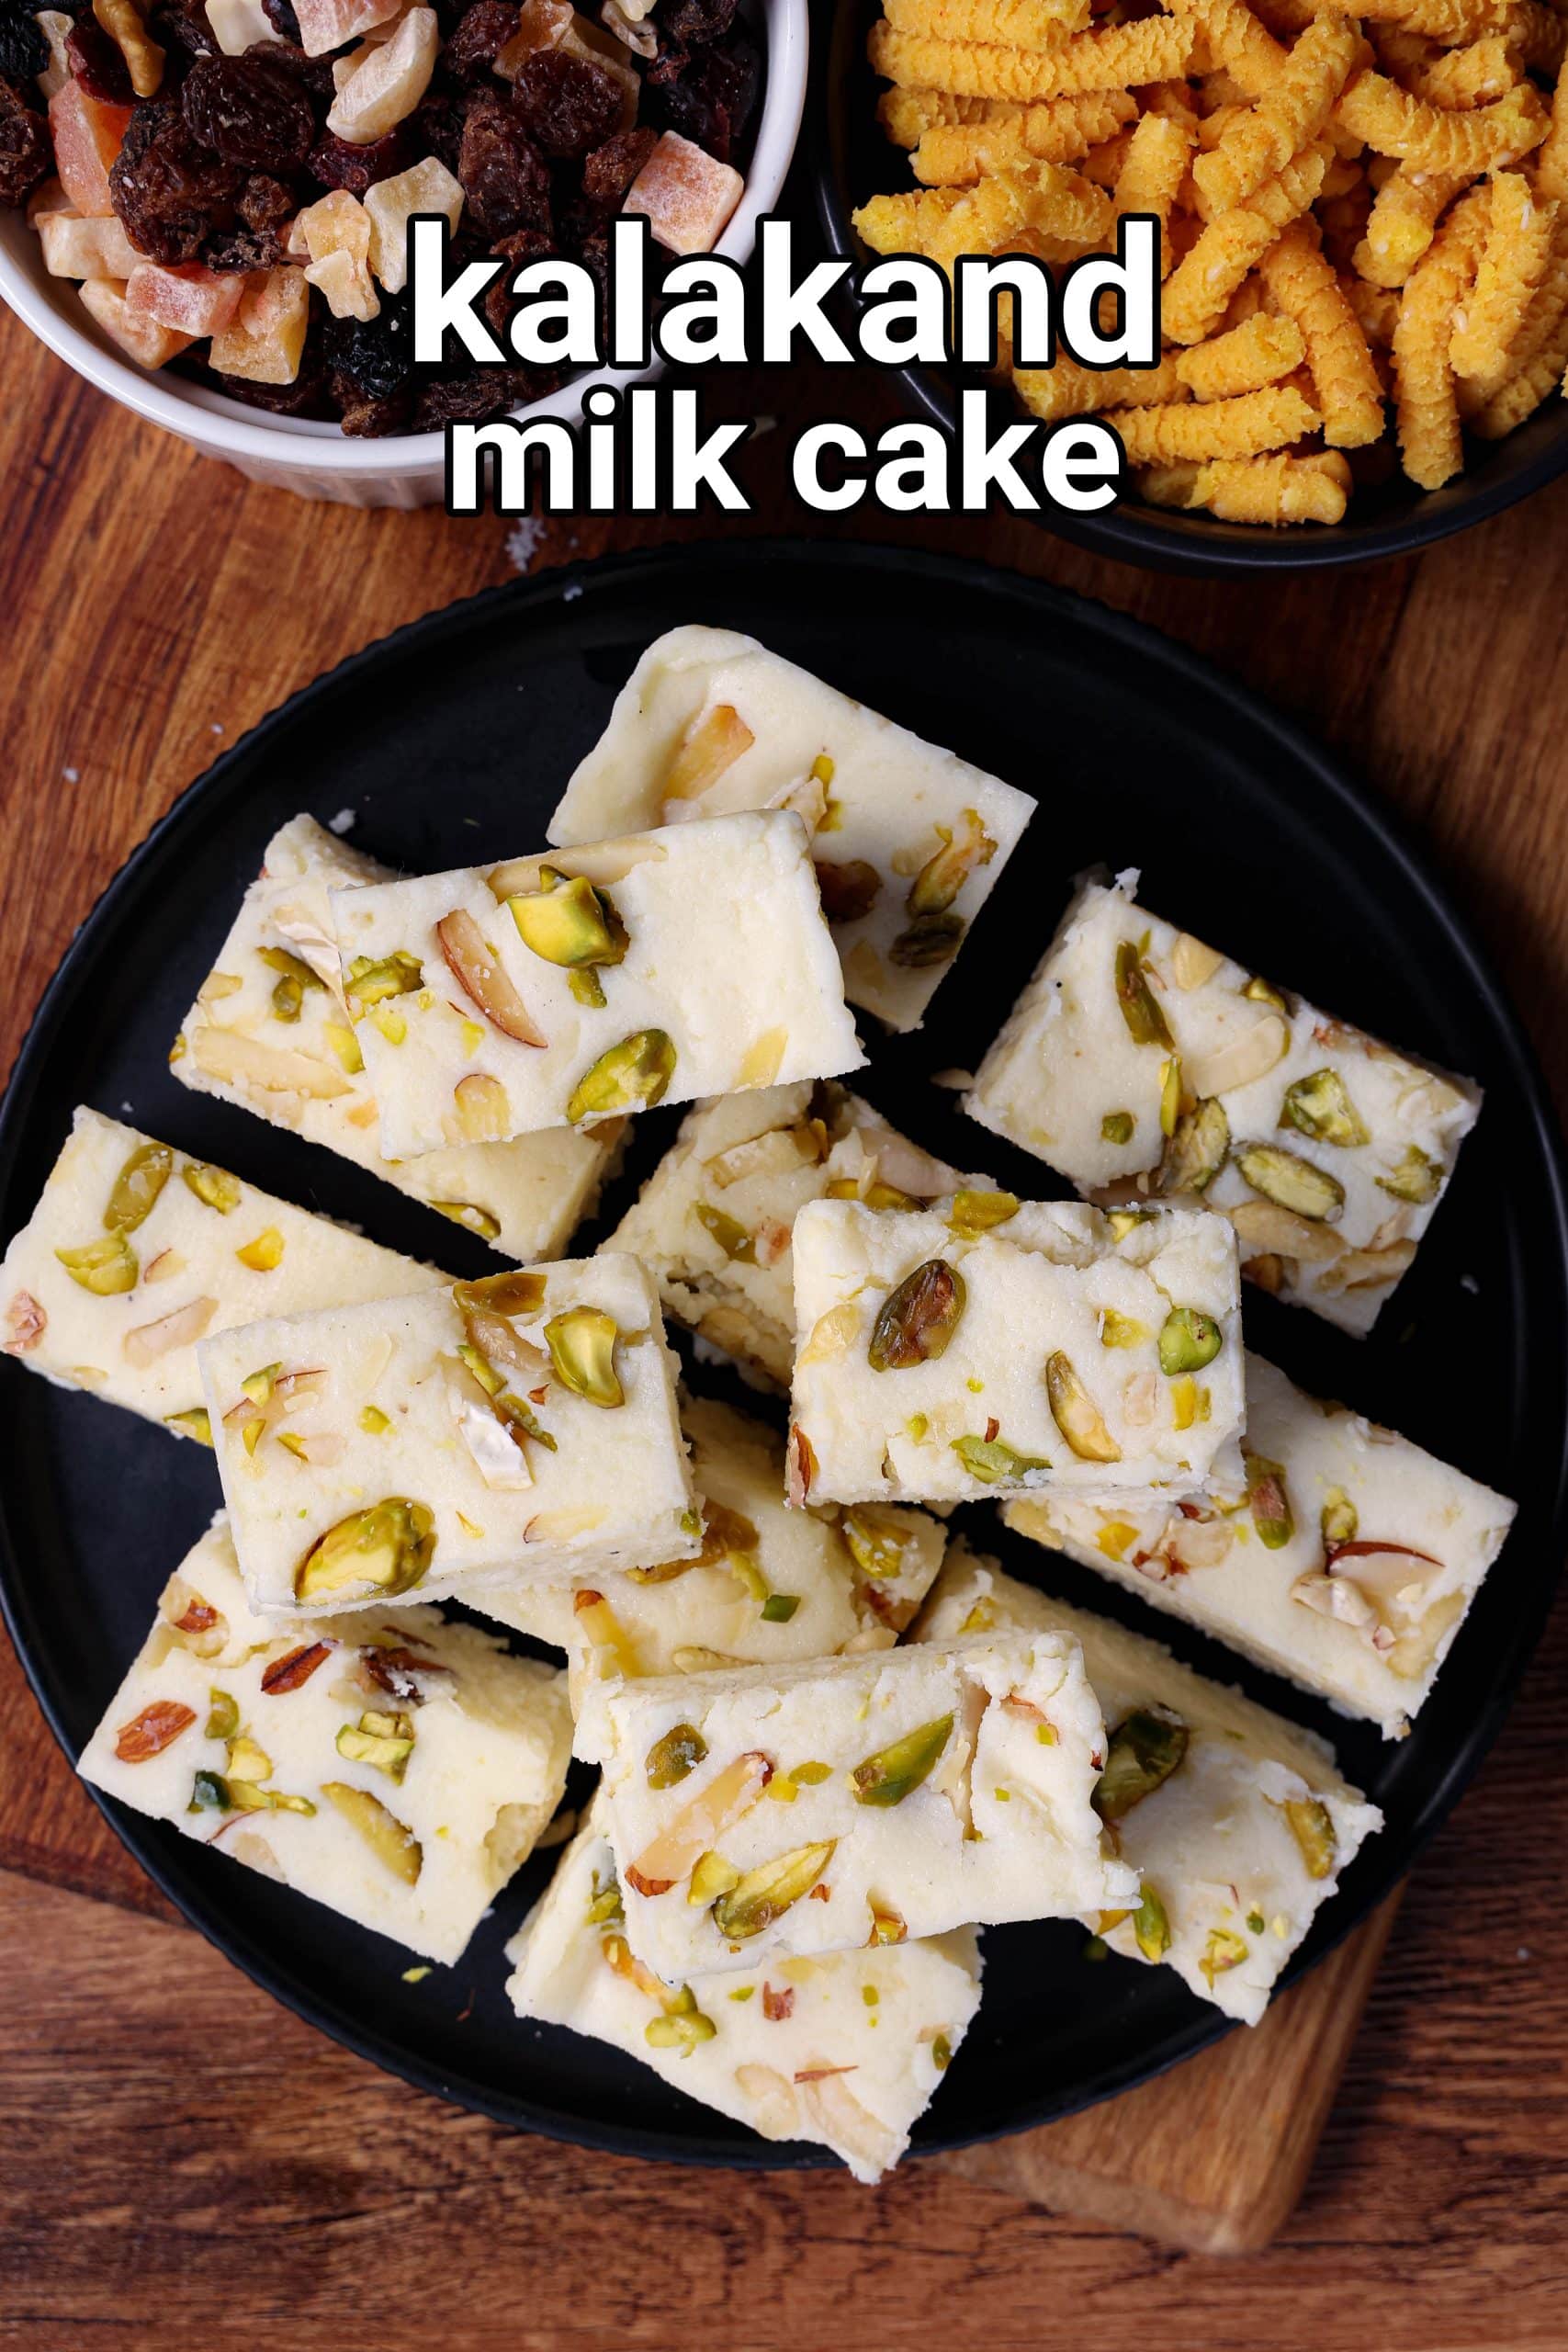 Kalakand Almond Cake Recipe - General Mills Foodservice